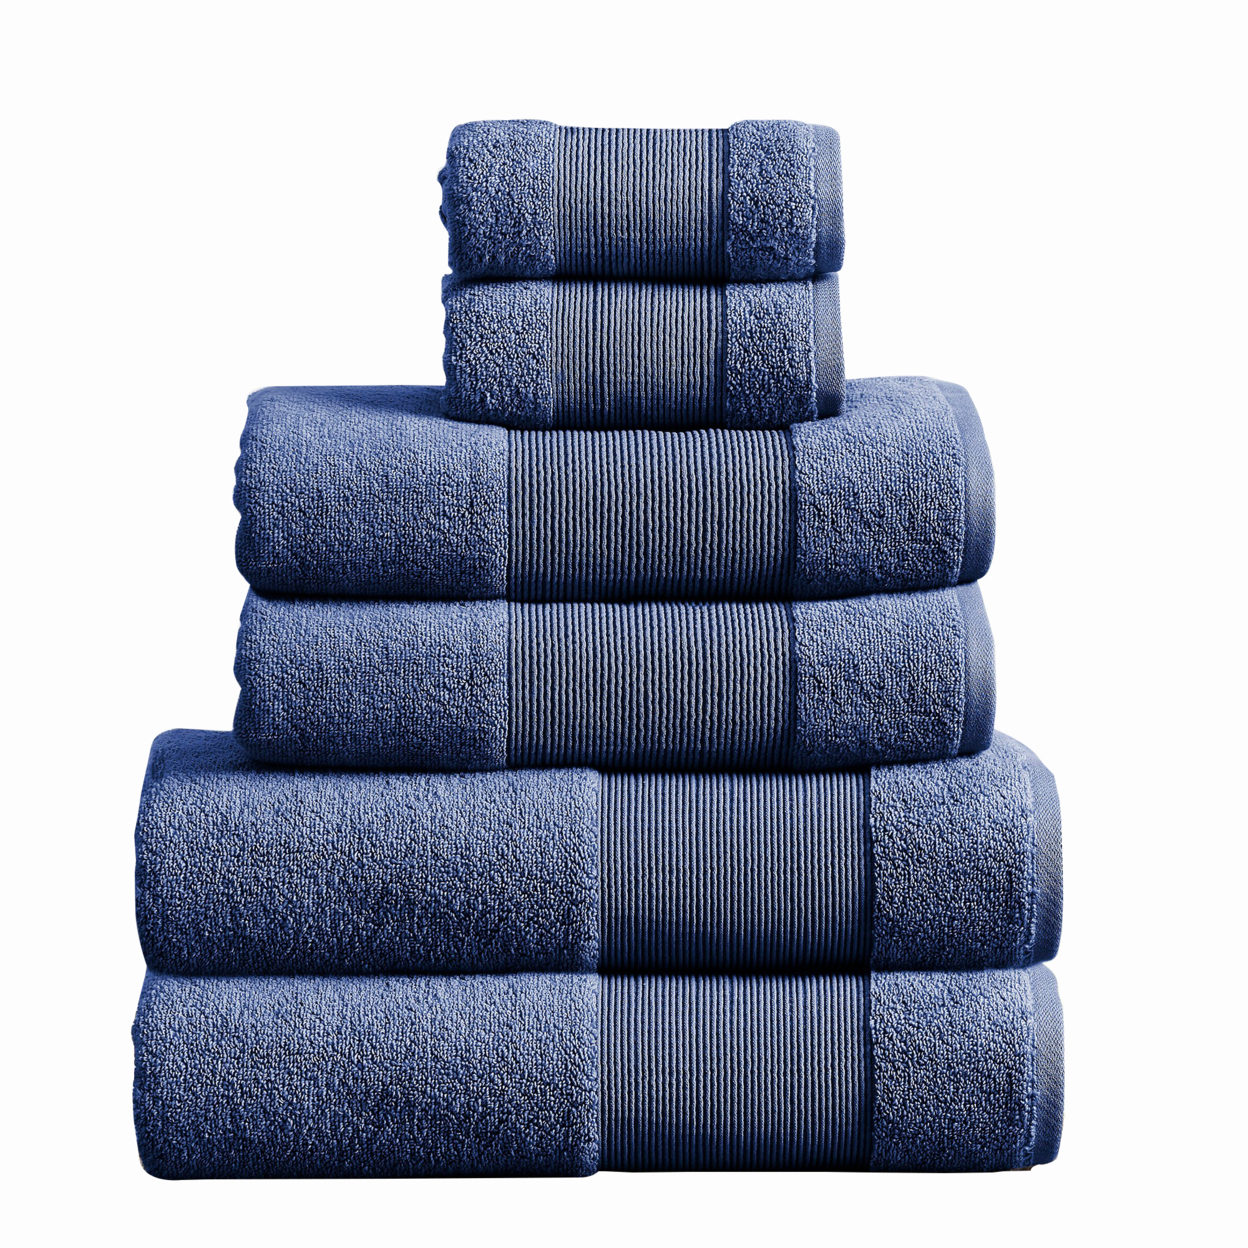 Indy Modern 6 Piece Cotton Towel Set, Softly Textured Design, Deep Blue- Saltoro Sherpi